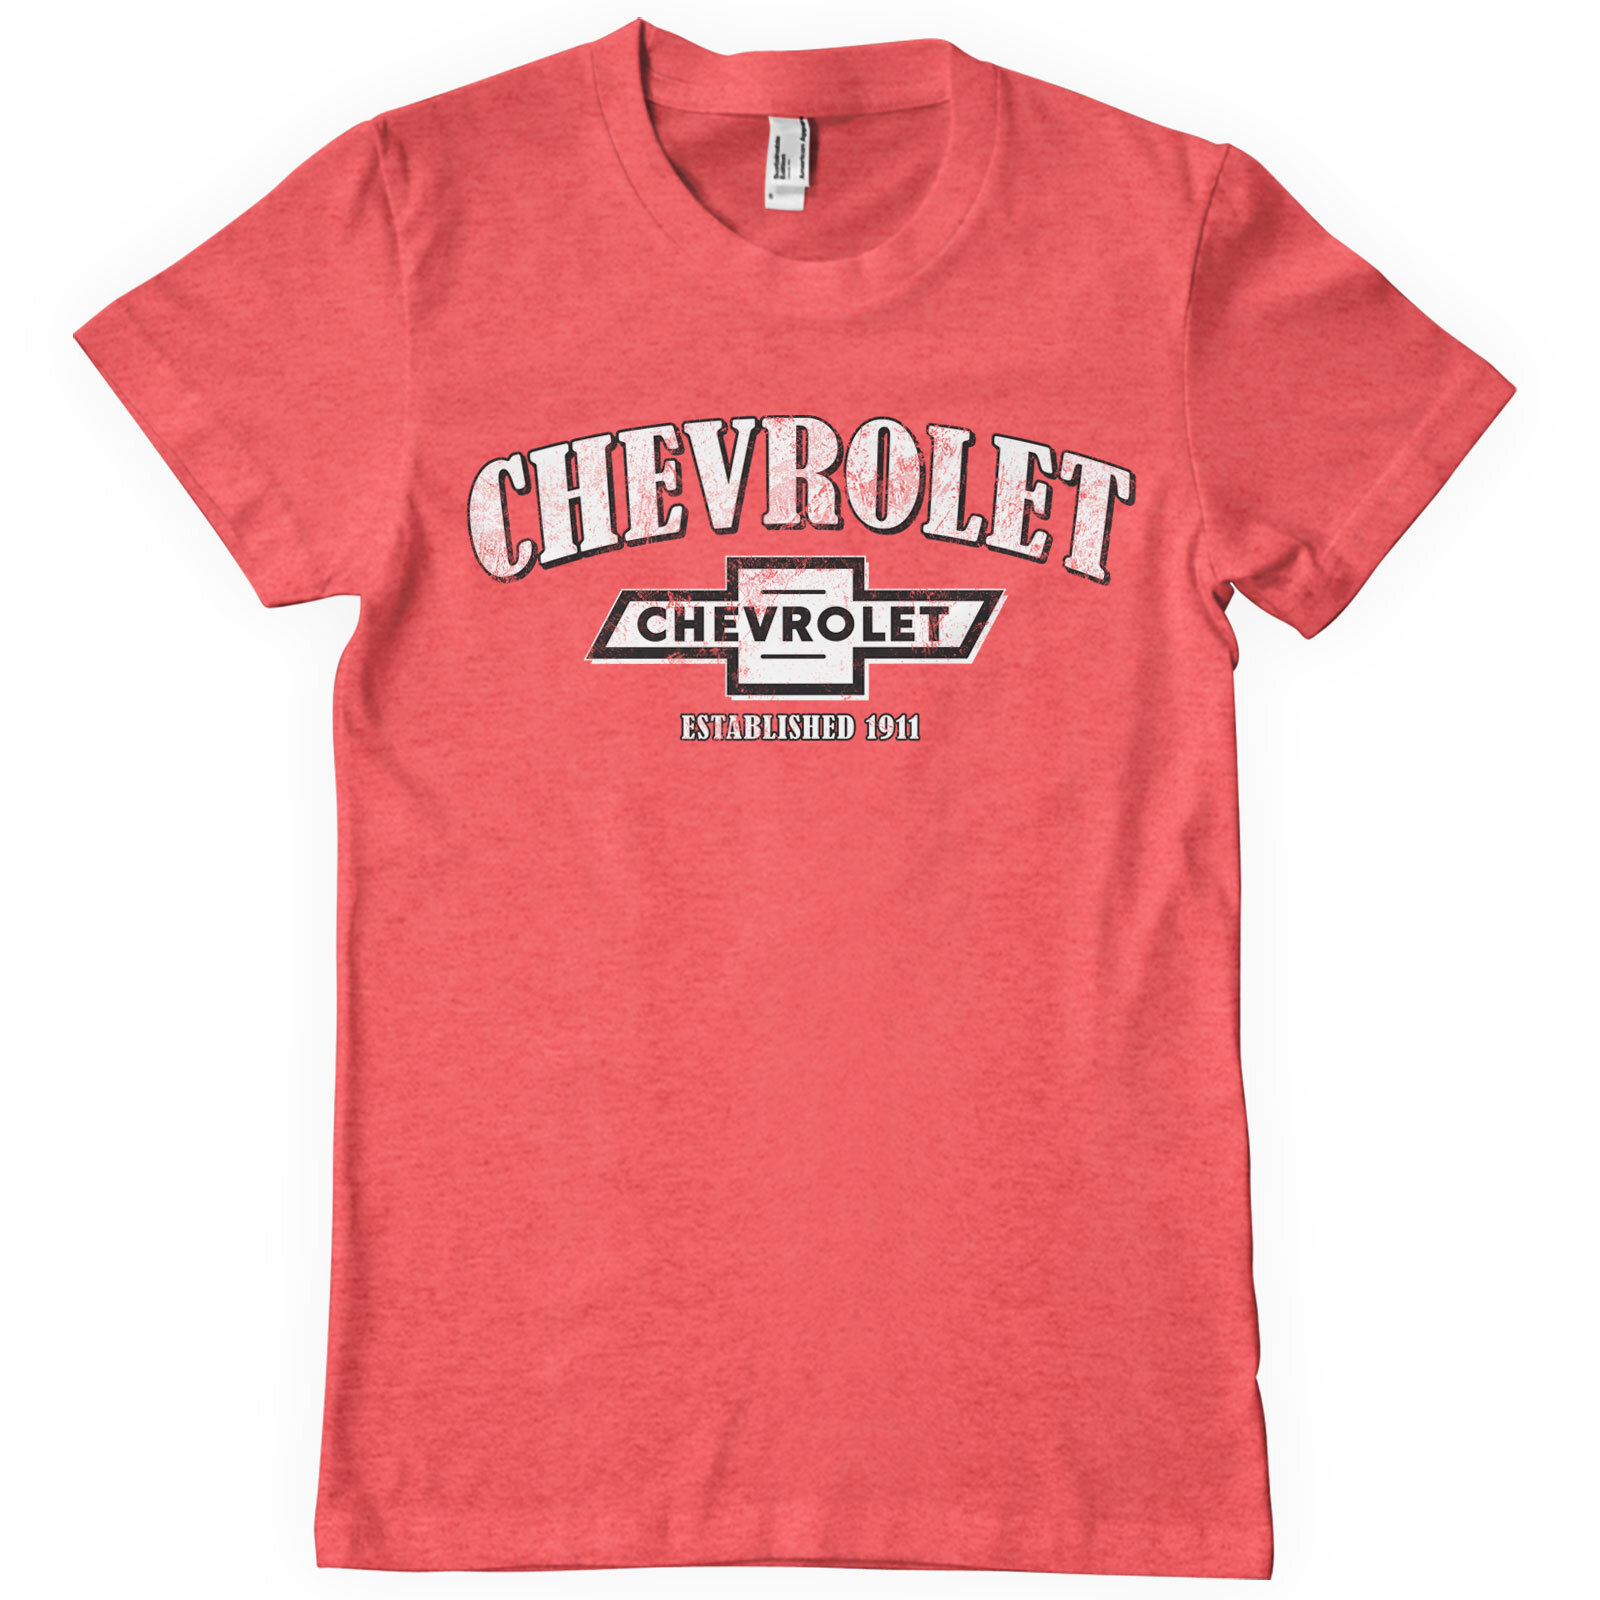 Chevrolet - Established 1911 T-Shirt